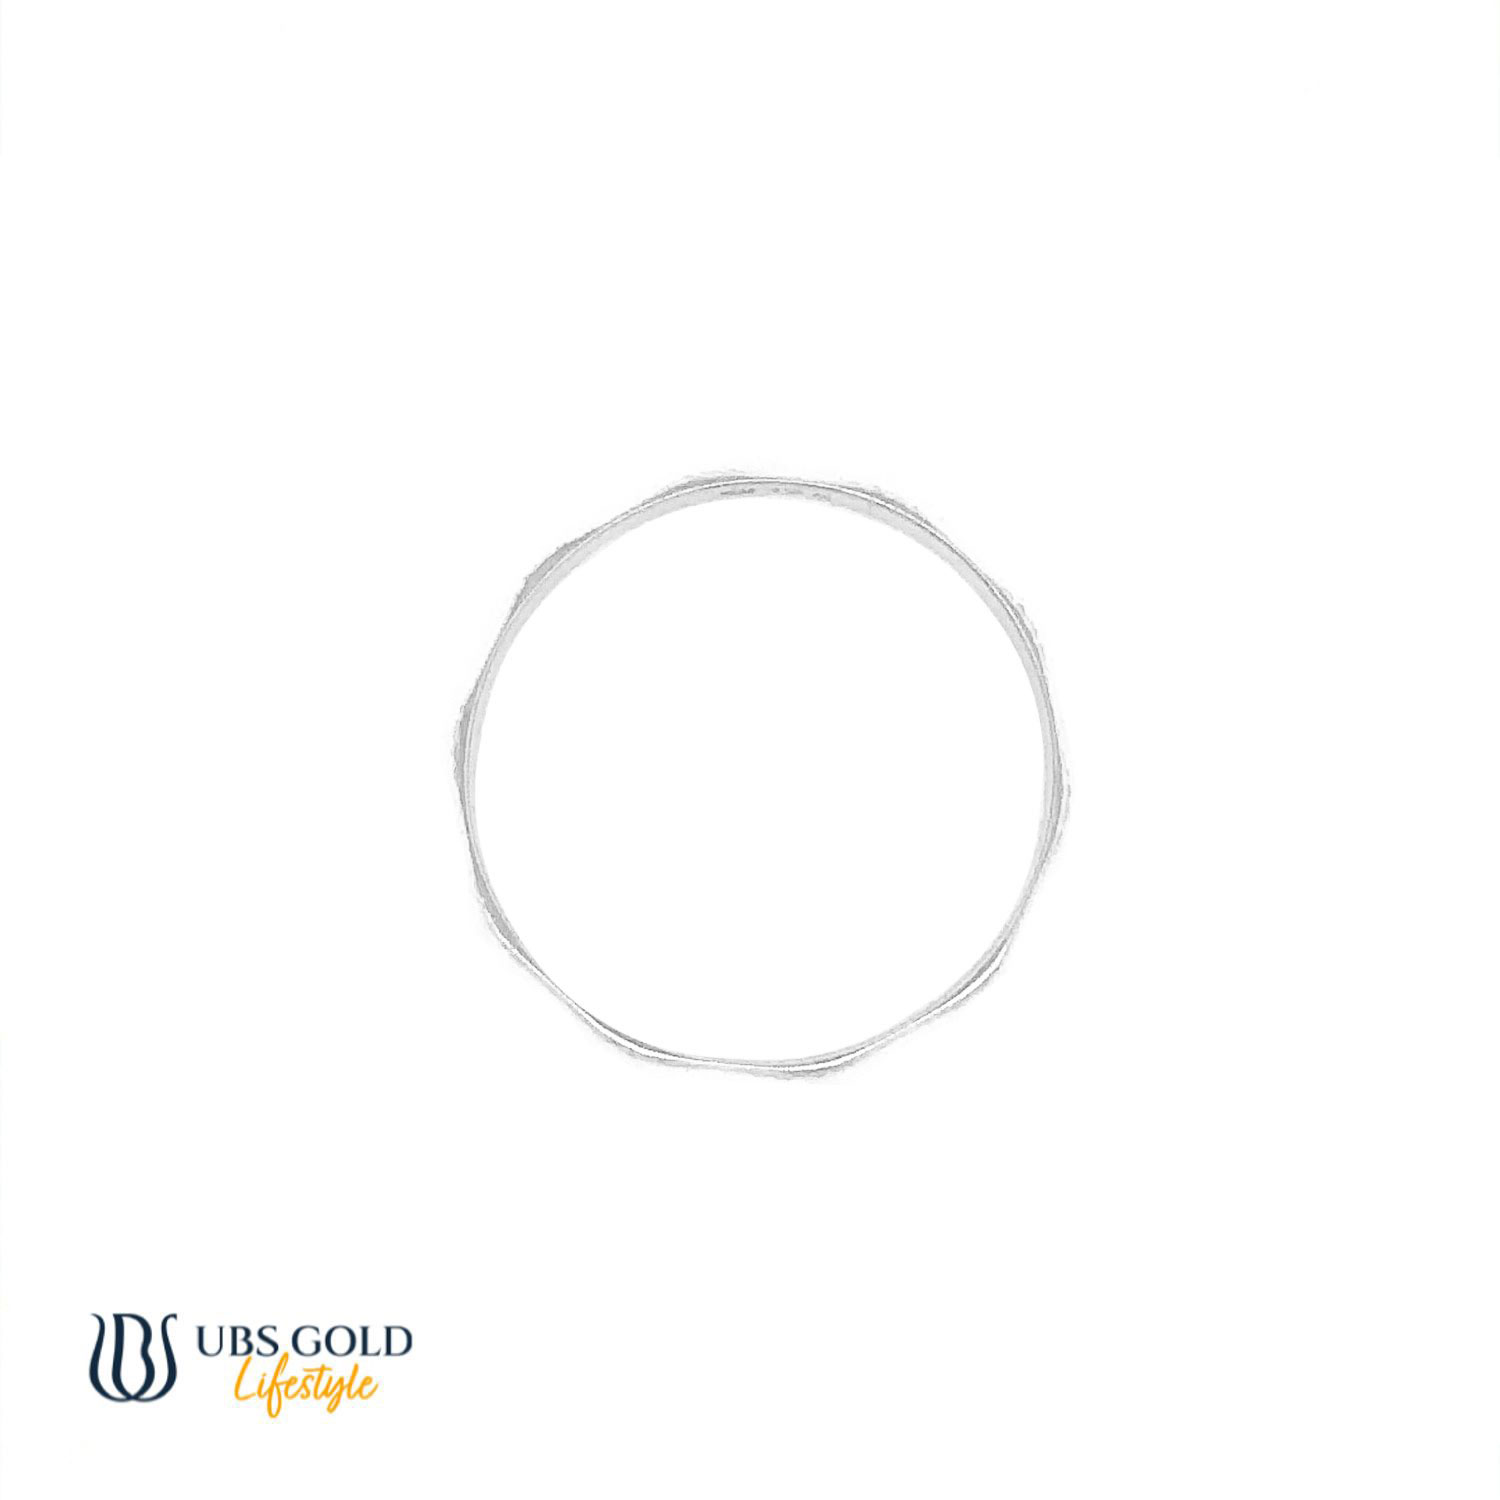 UBS Gold Cincin Emas - V7c0018 - 17K